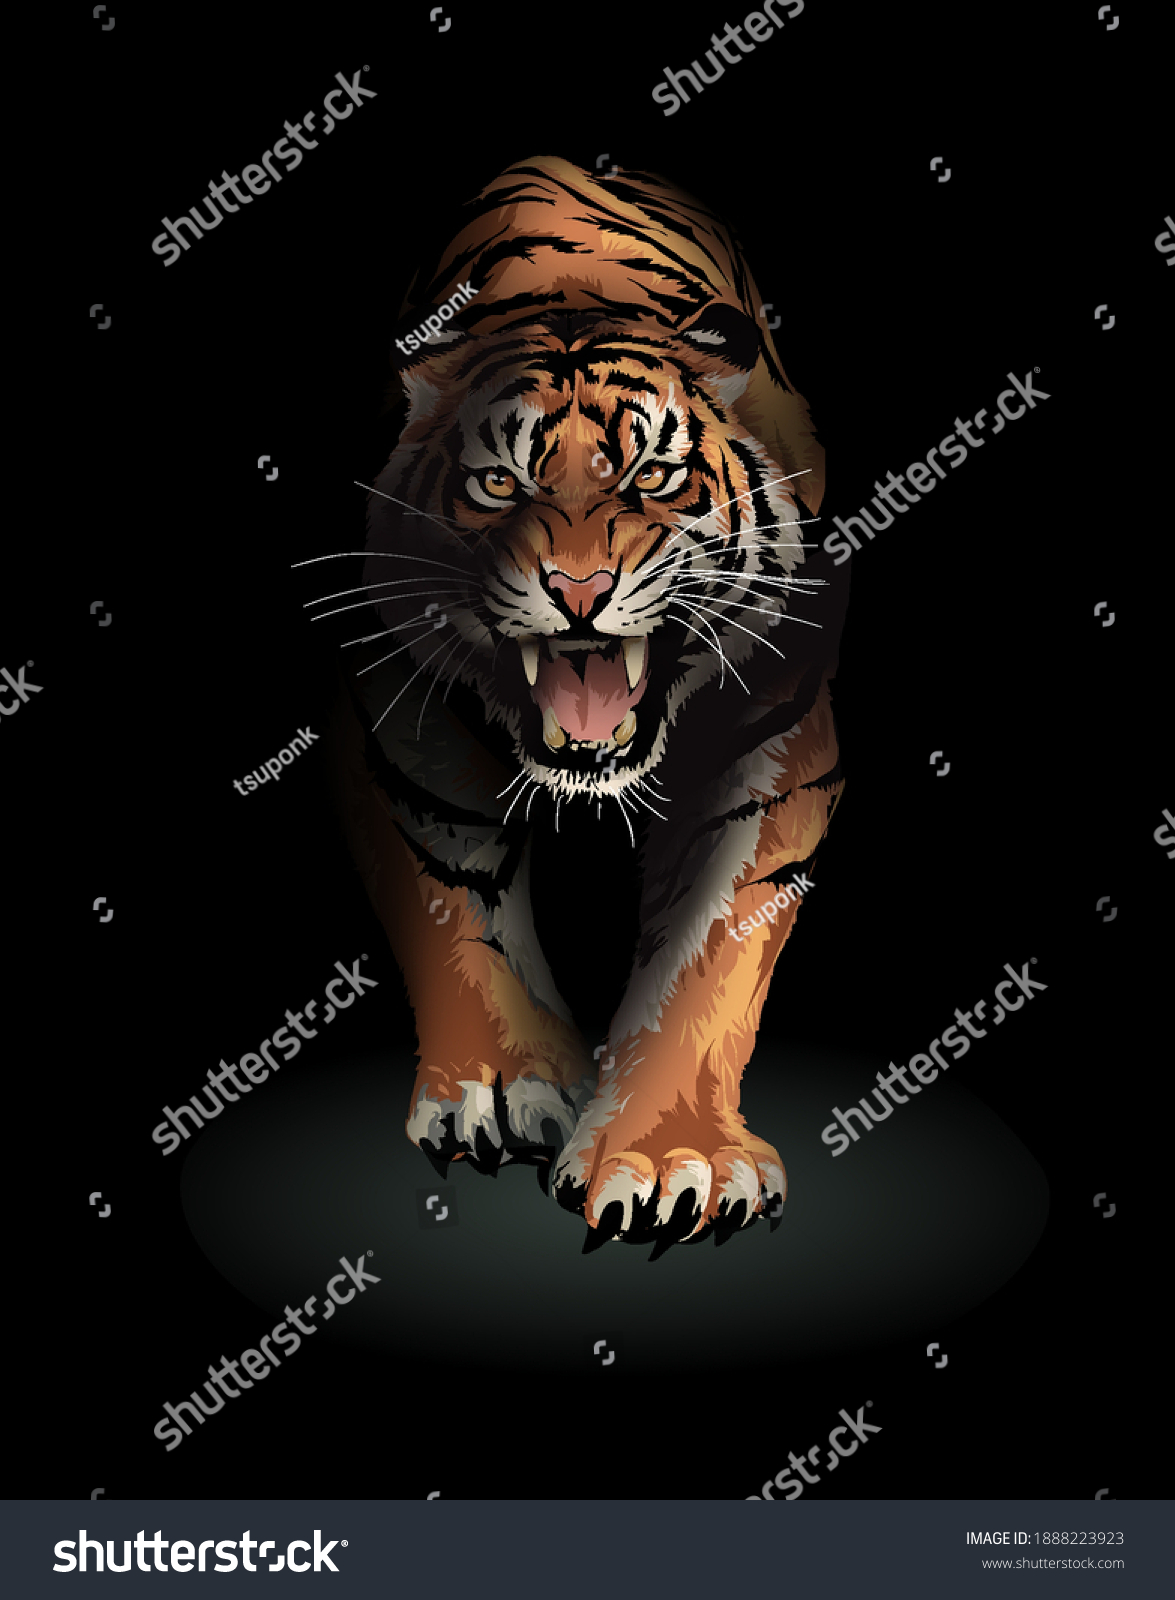 Roaring Tiger Walking Shadow Illustration Stock Vector Royalty Free 1888223923 0160